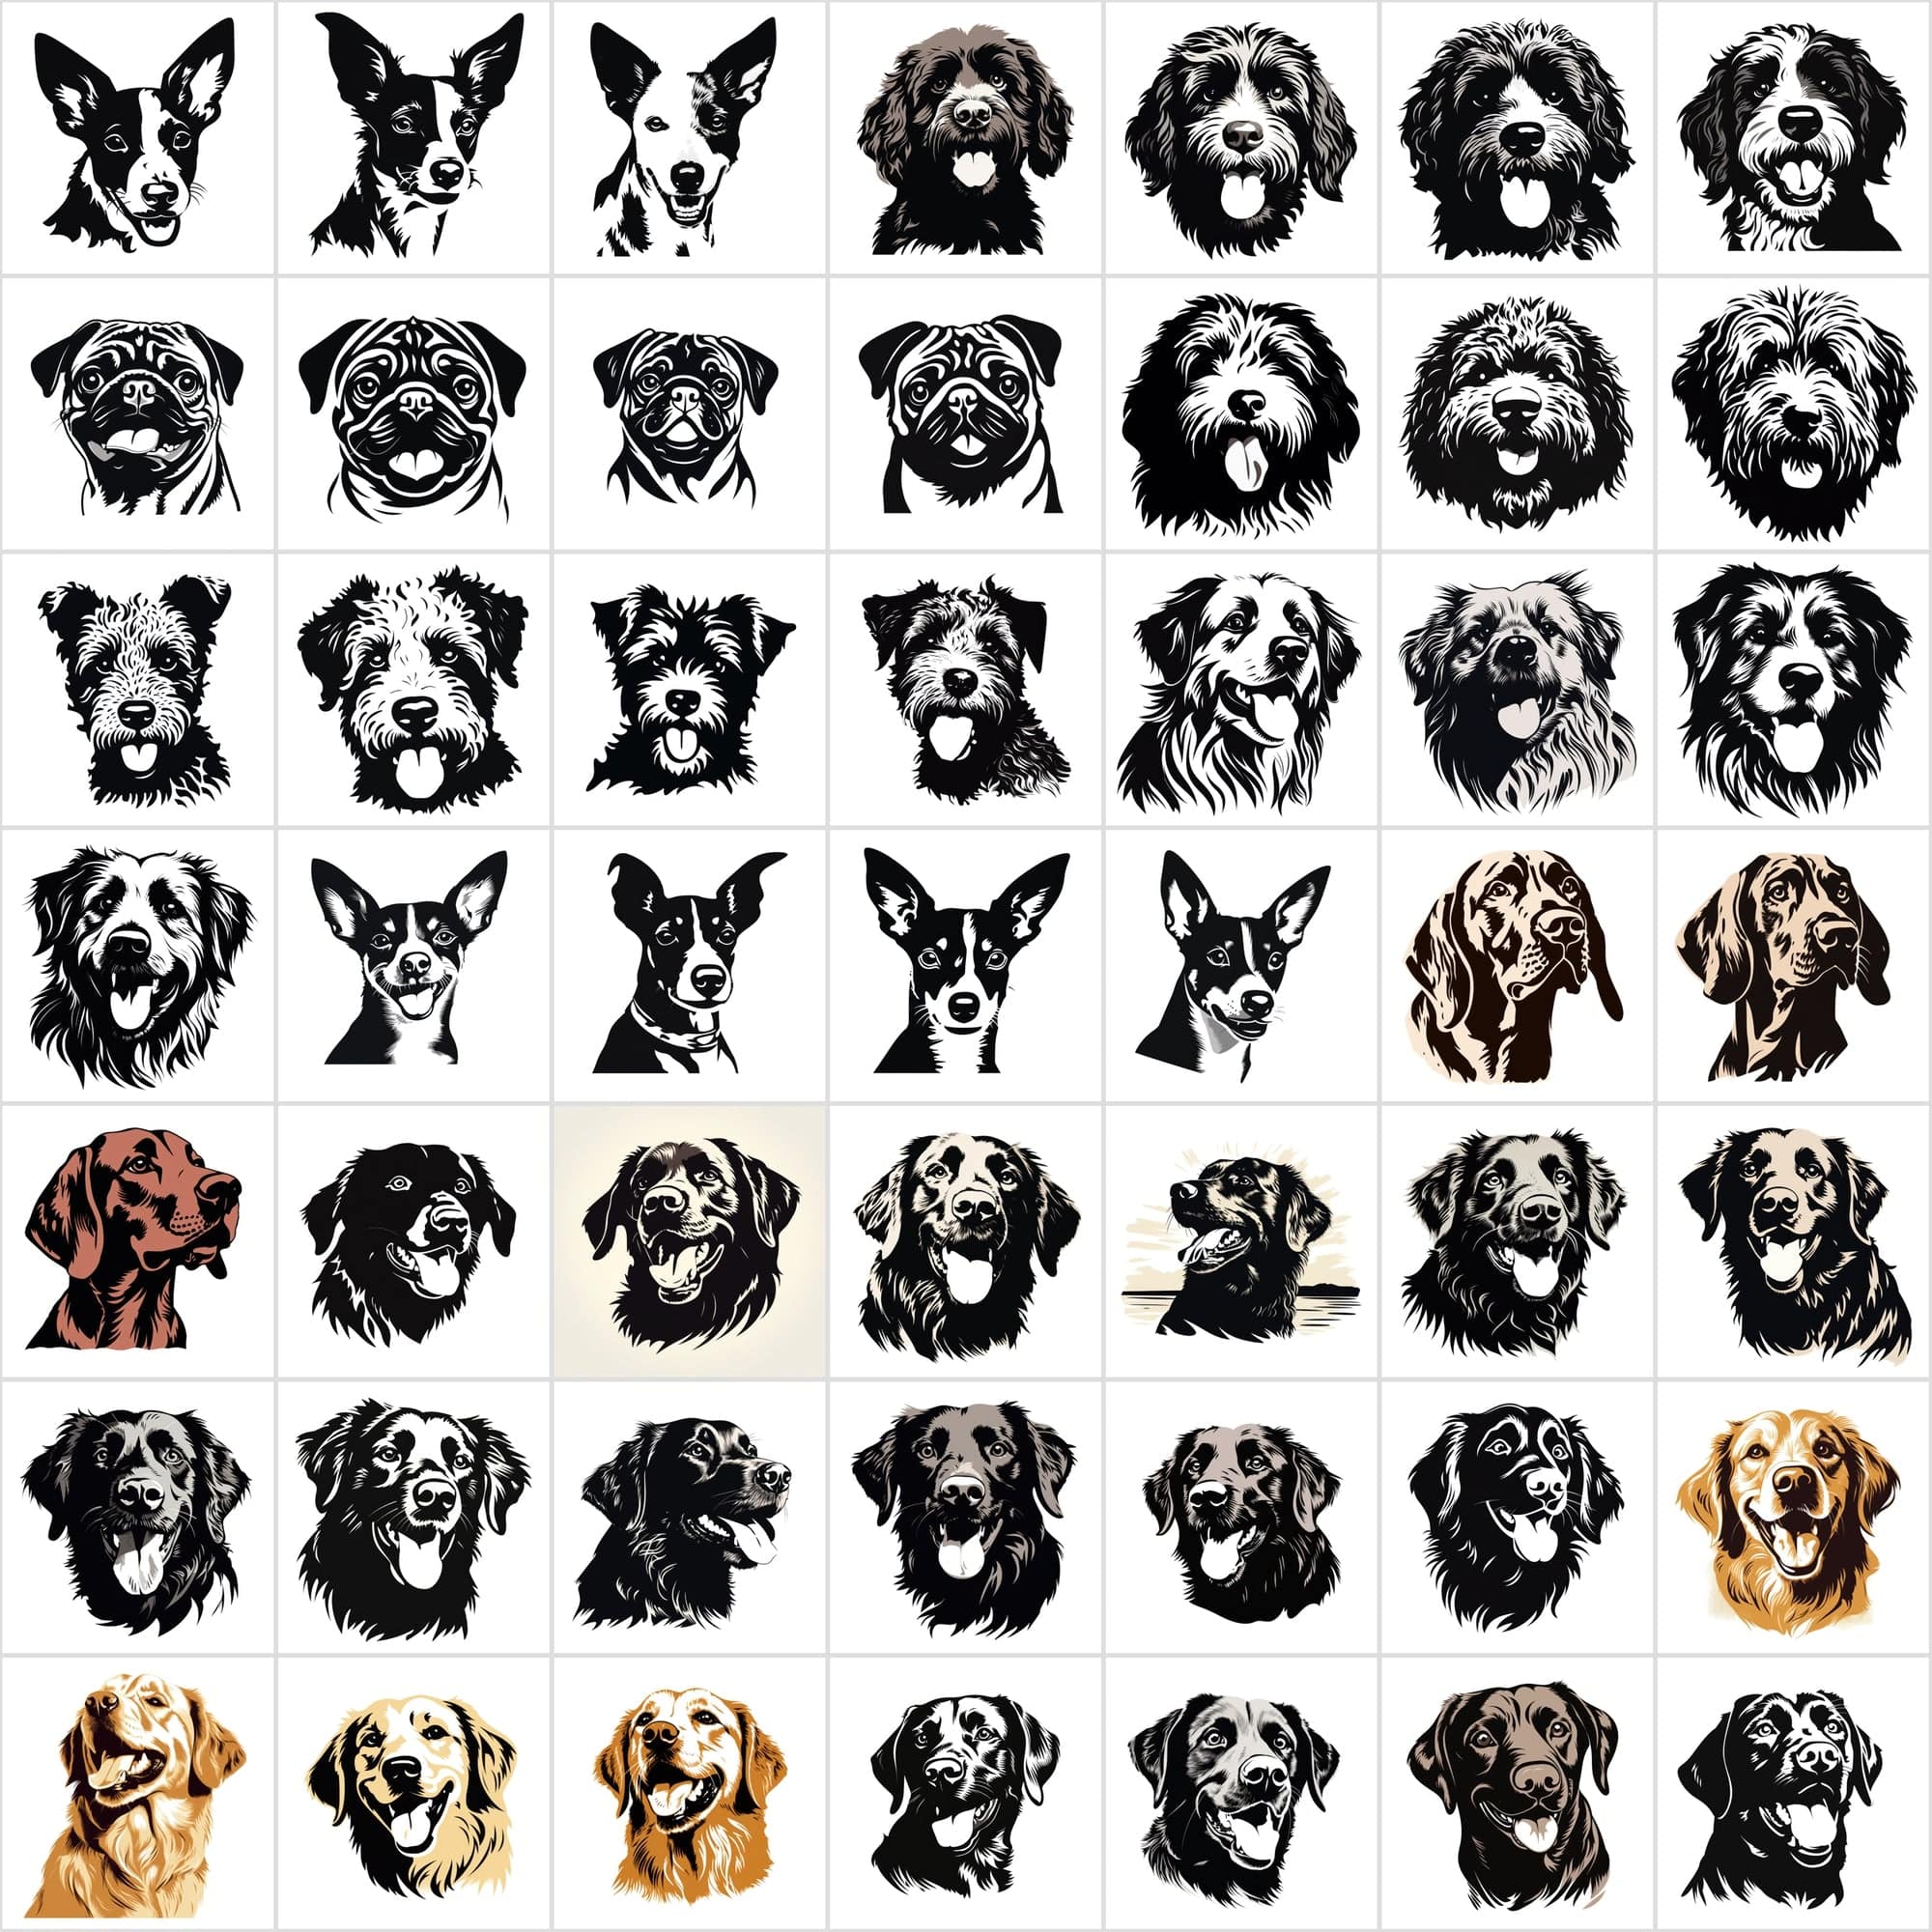 730 Premium Dog PNG Collection for Print-On-Demand, High-Quality Black & White Dog Images Digital Download Sumobundle